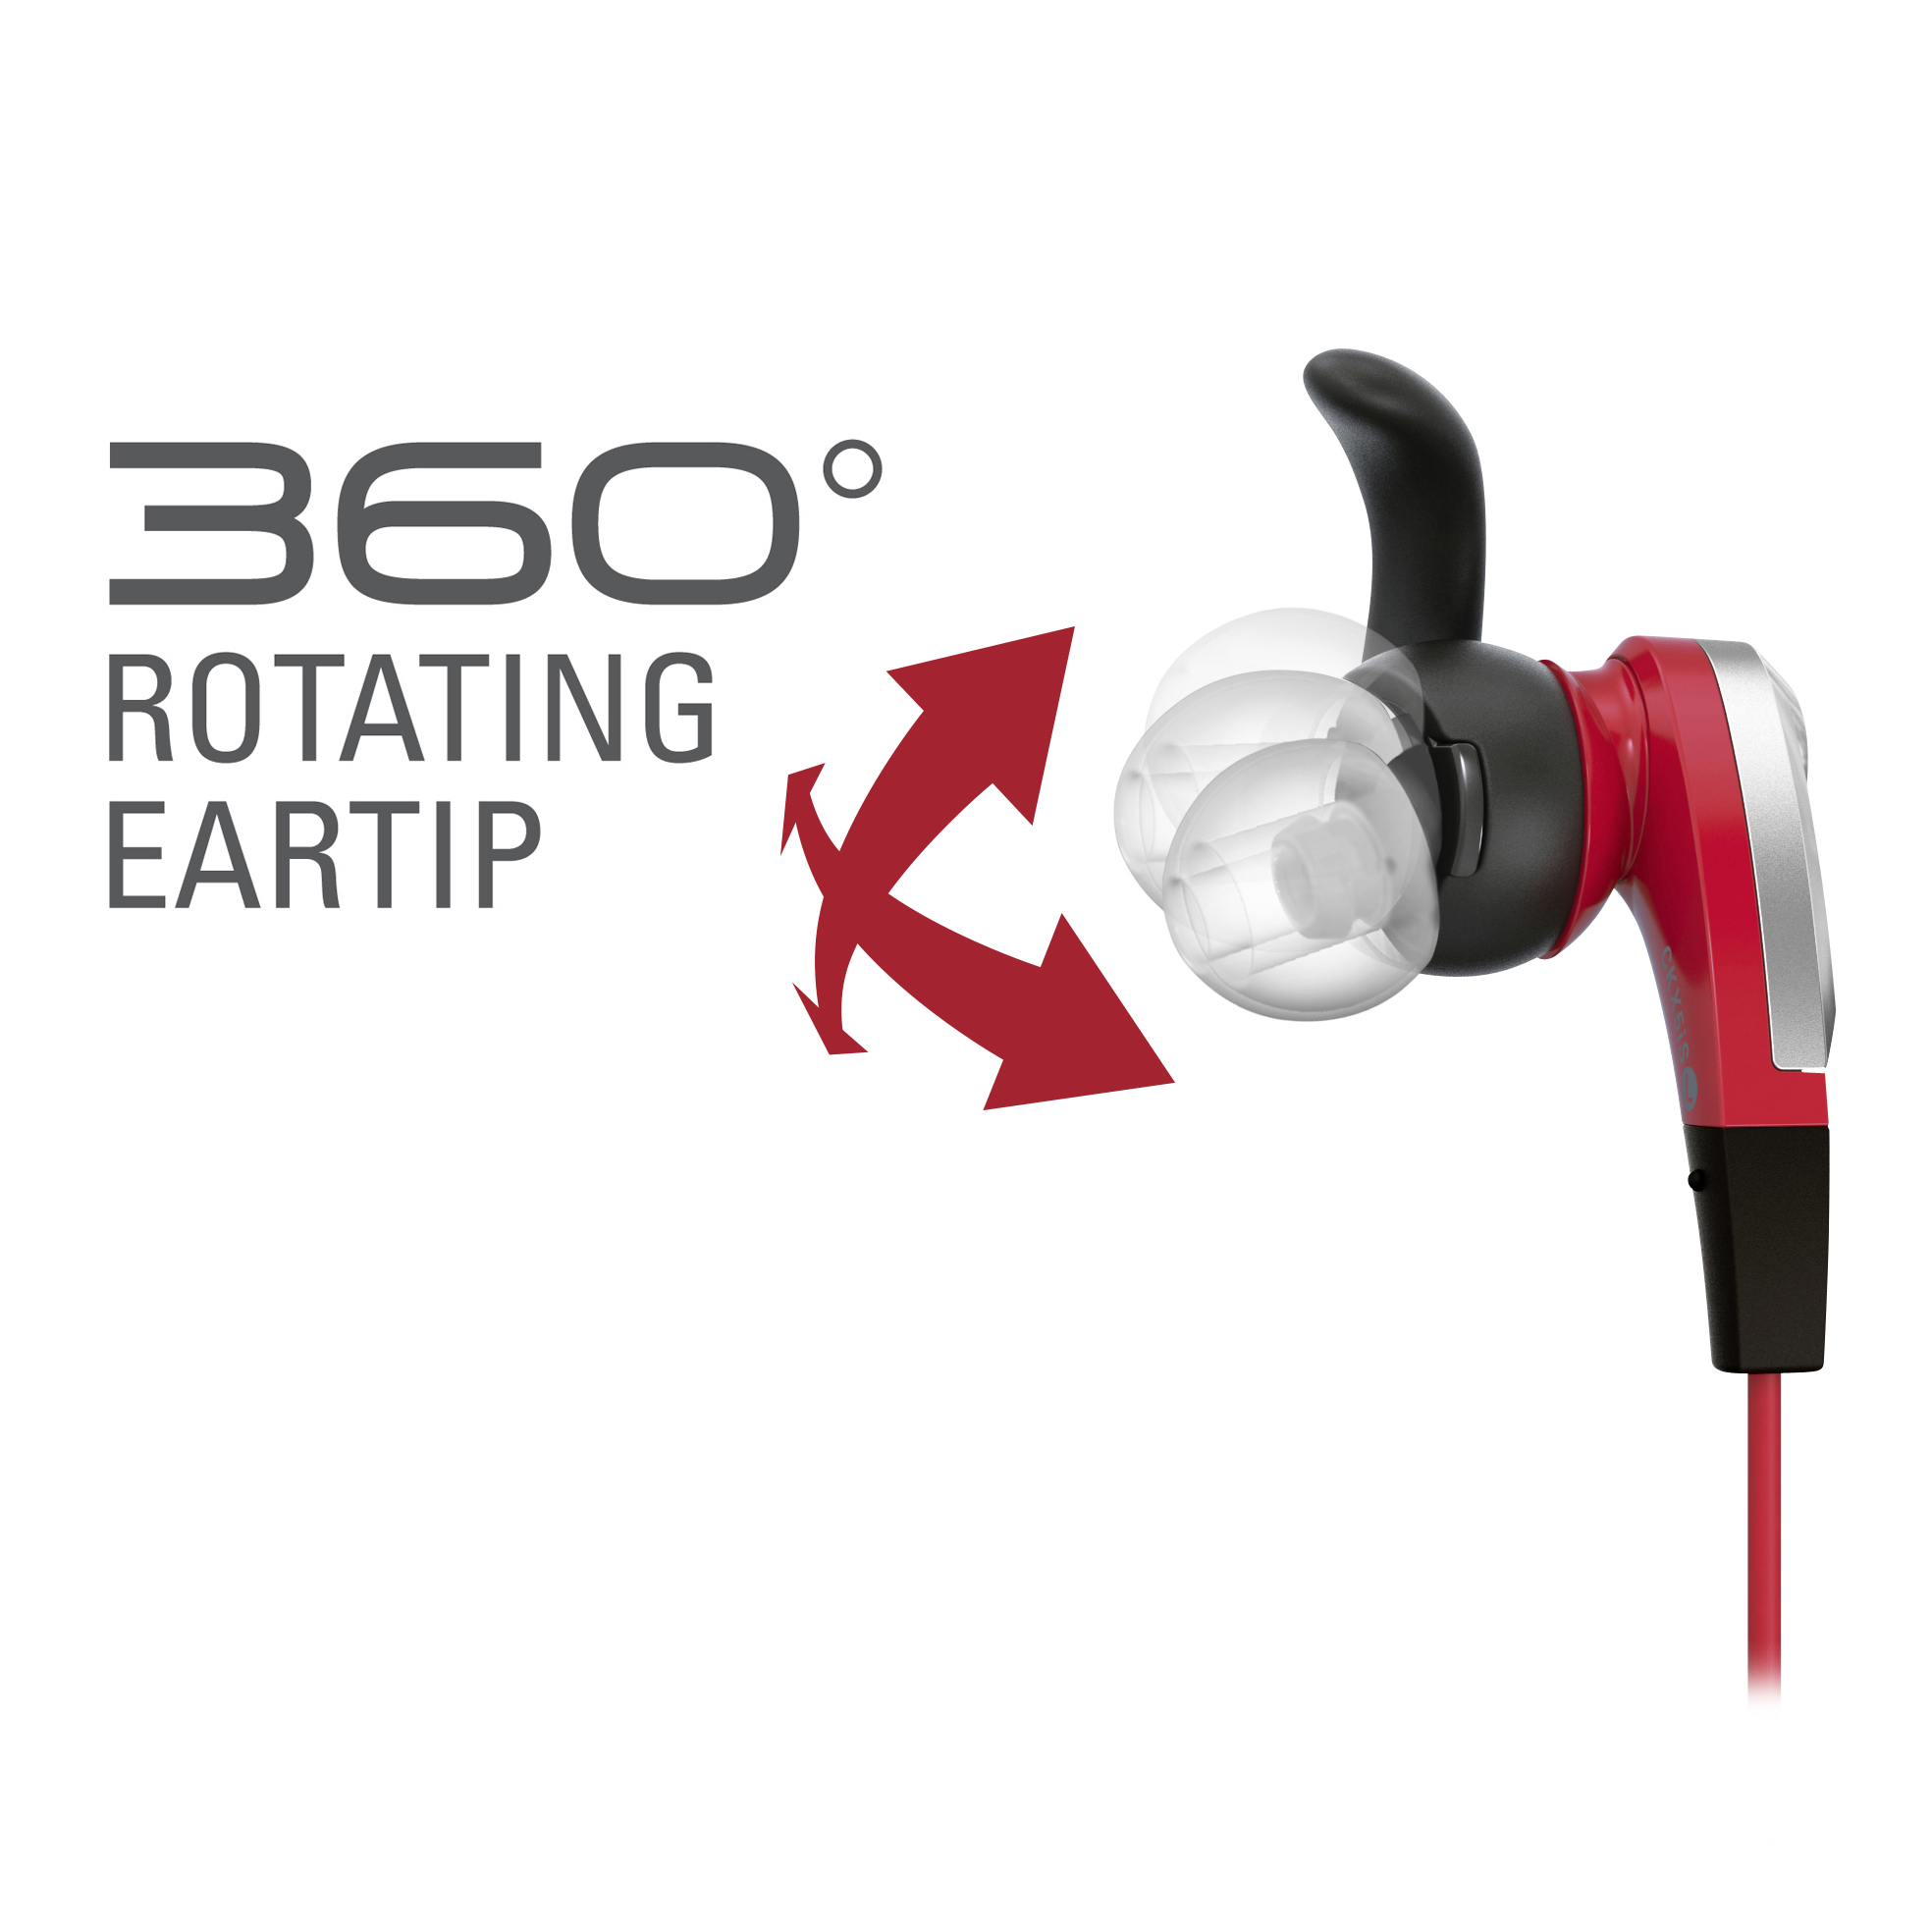 Audio-Technica's 360-Degree Rotating Ear Tips